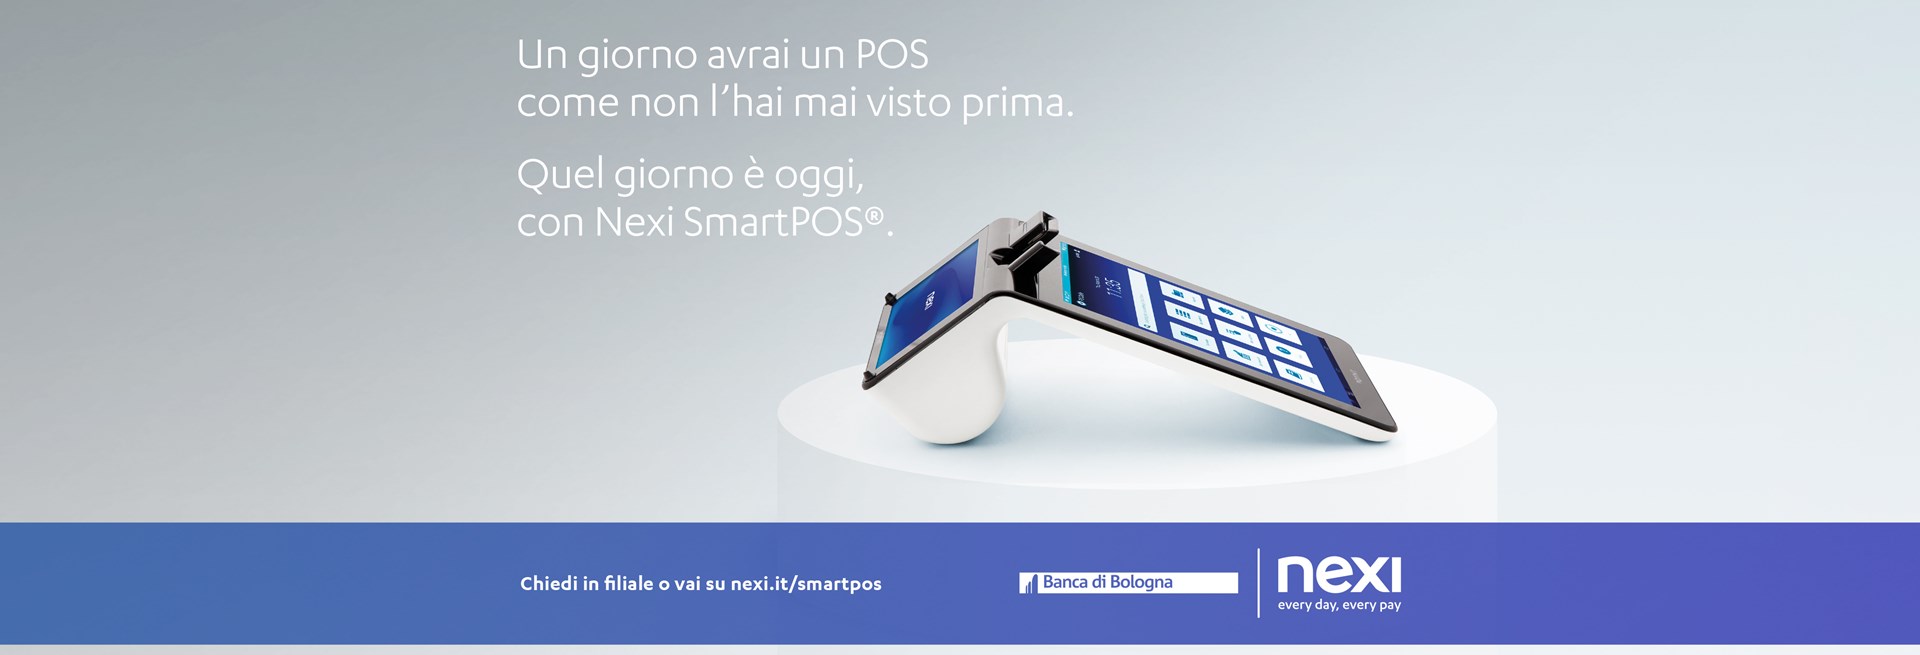 Nexi Smartpos Web